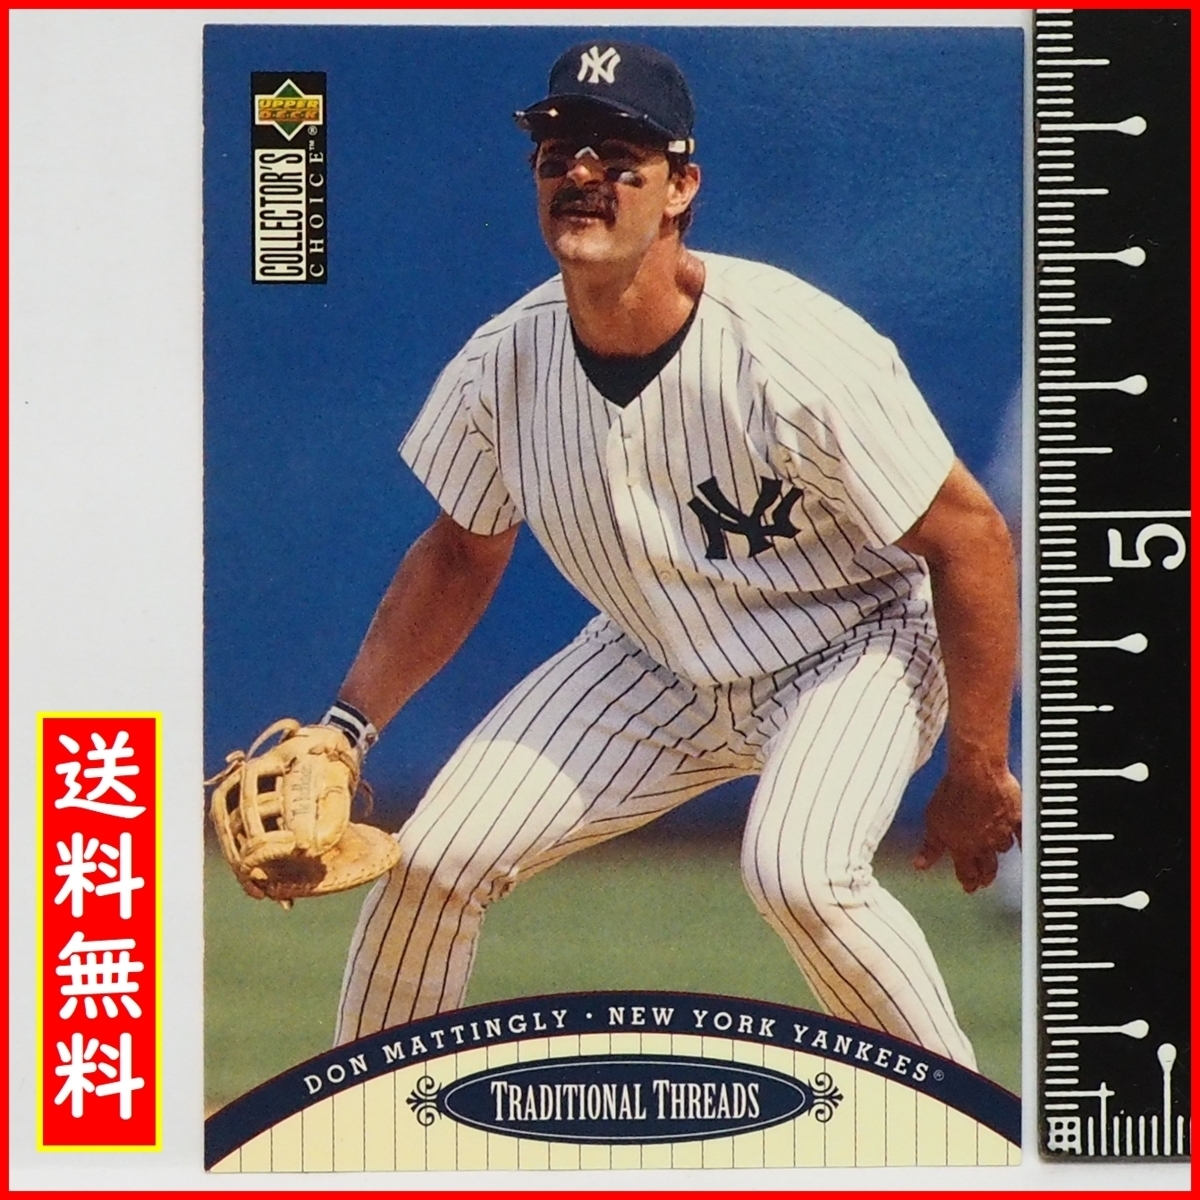 1996 Upper Deck Collector's Choice #100 Traditional Threads【Don Mattingly(Yankees)】アッパーデック96年MLBメジャーリーグ野球カード_画像1